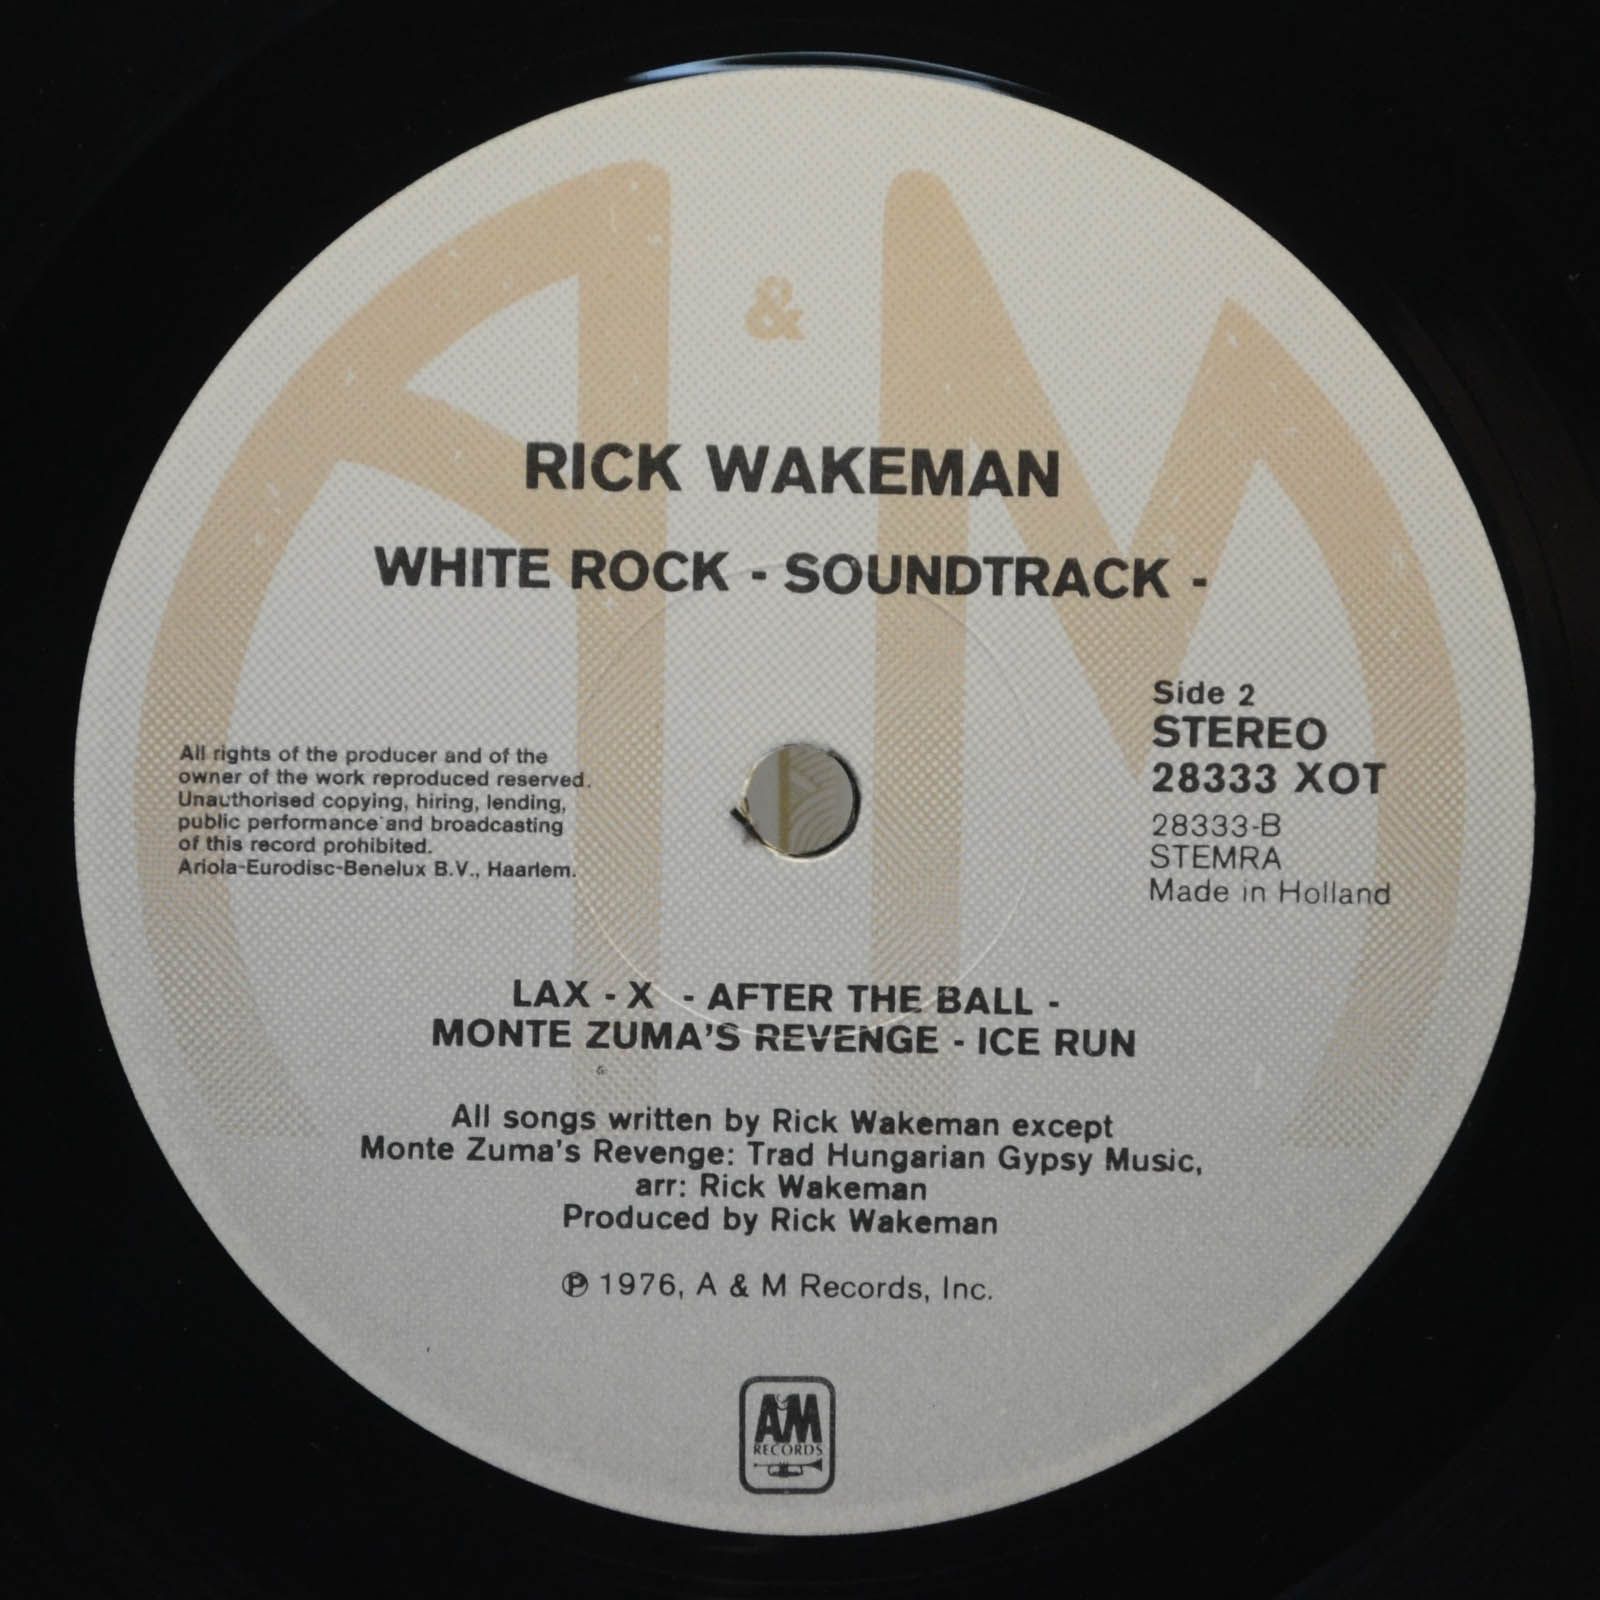 Rick Wakeman — White Rock, 1976